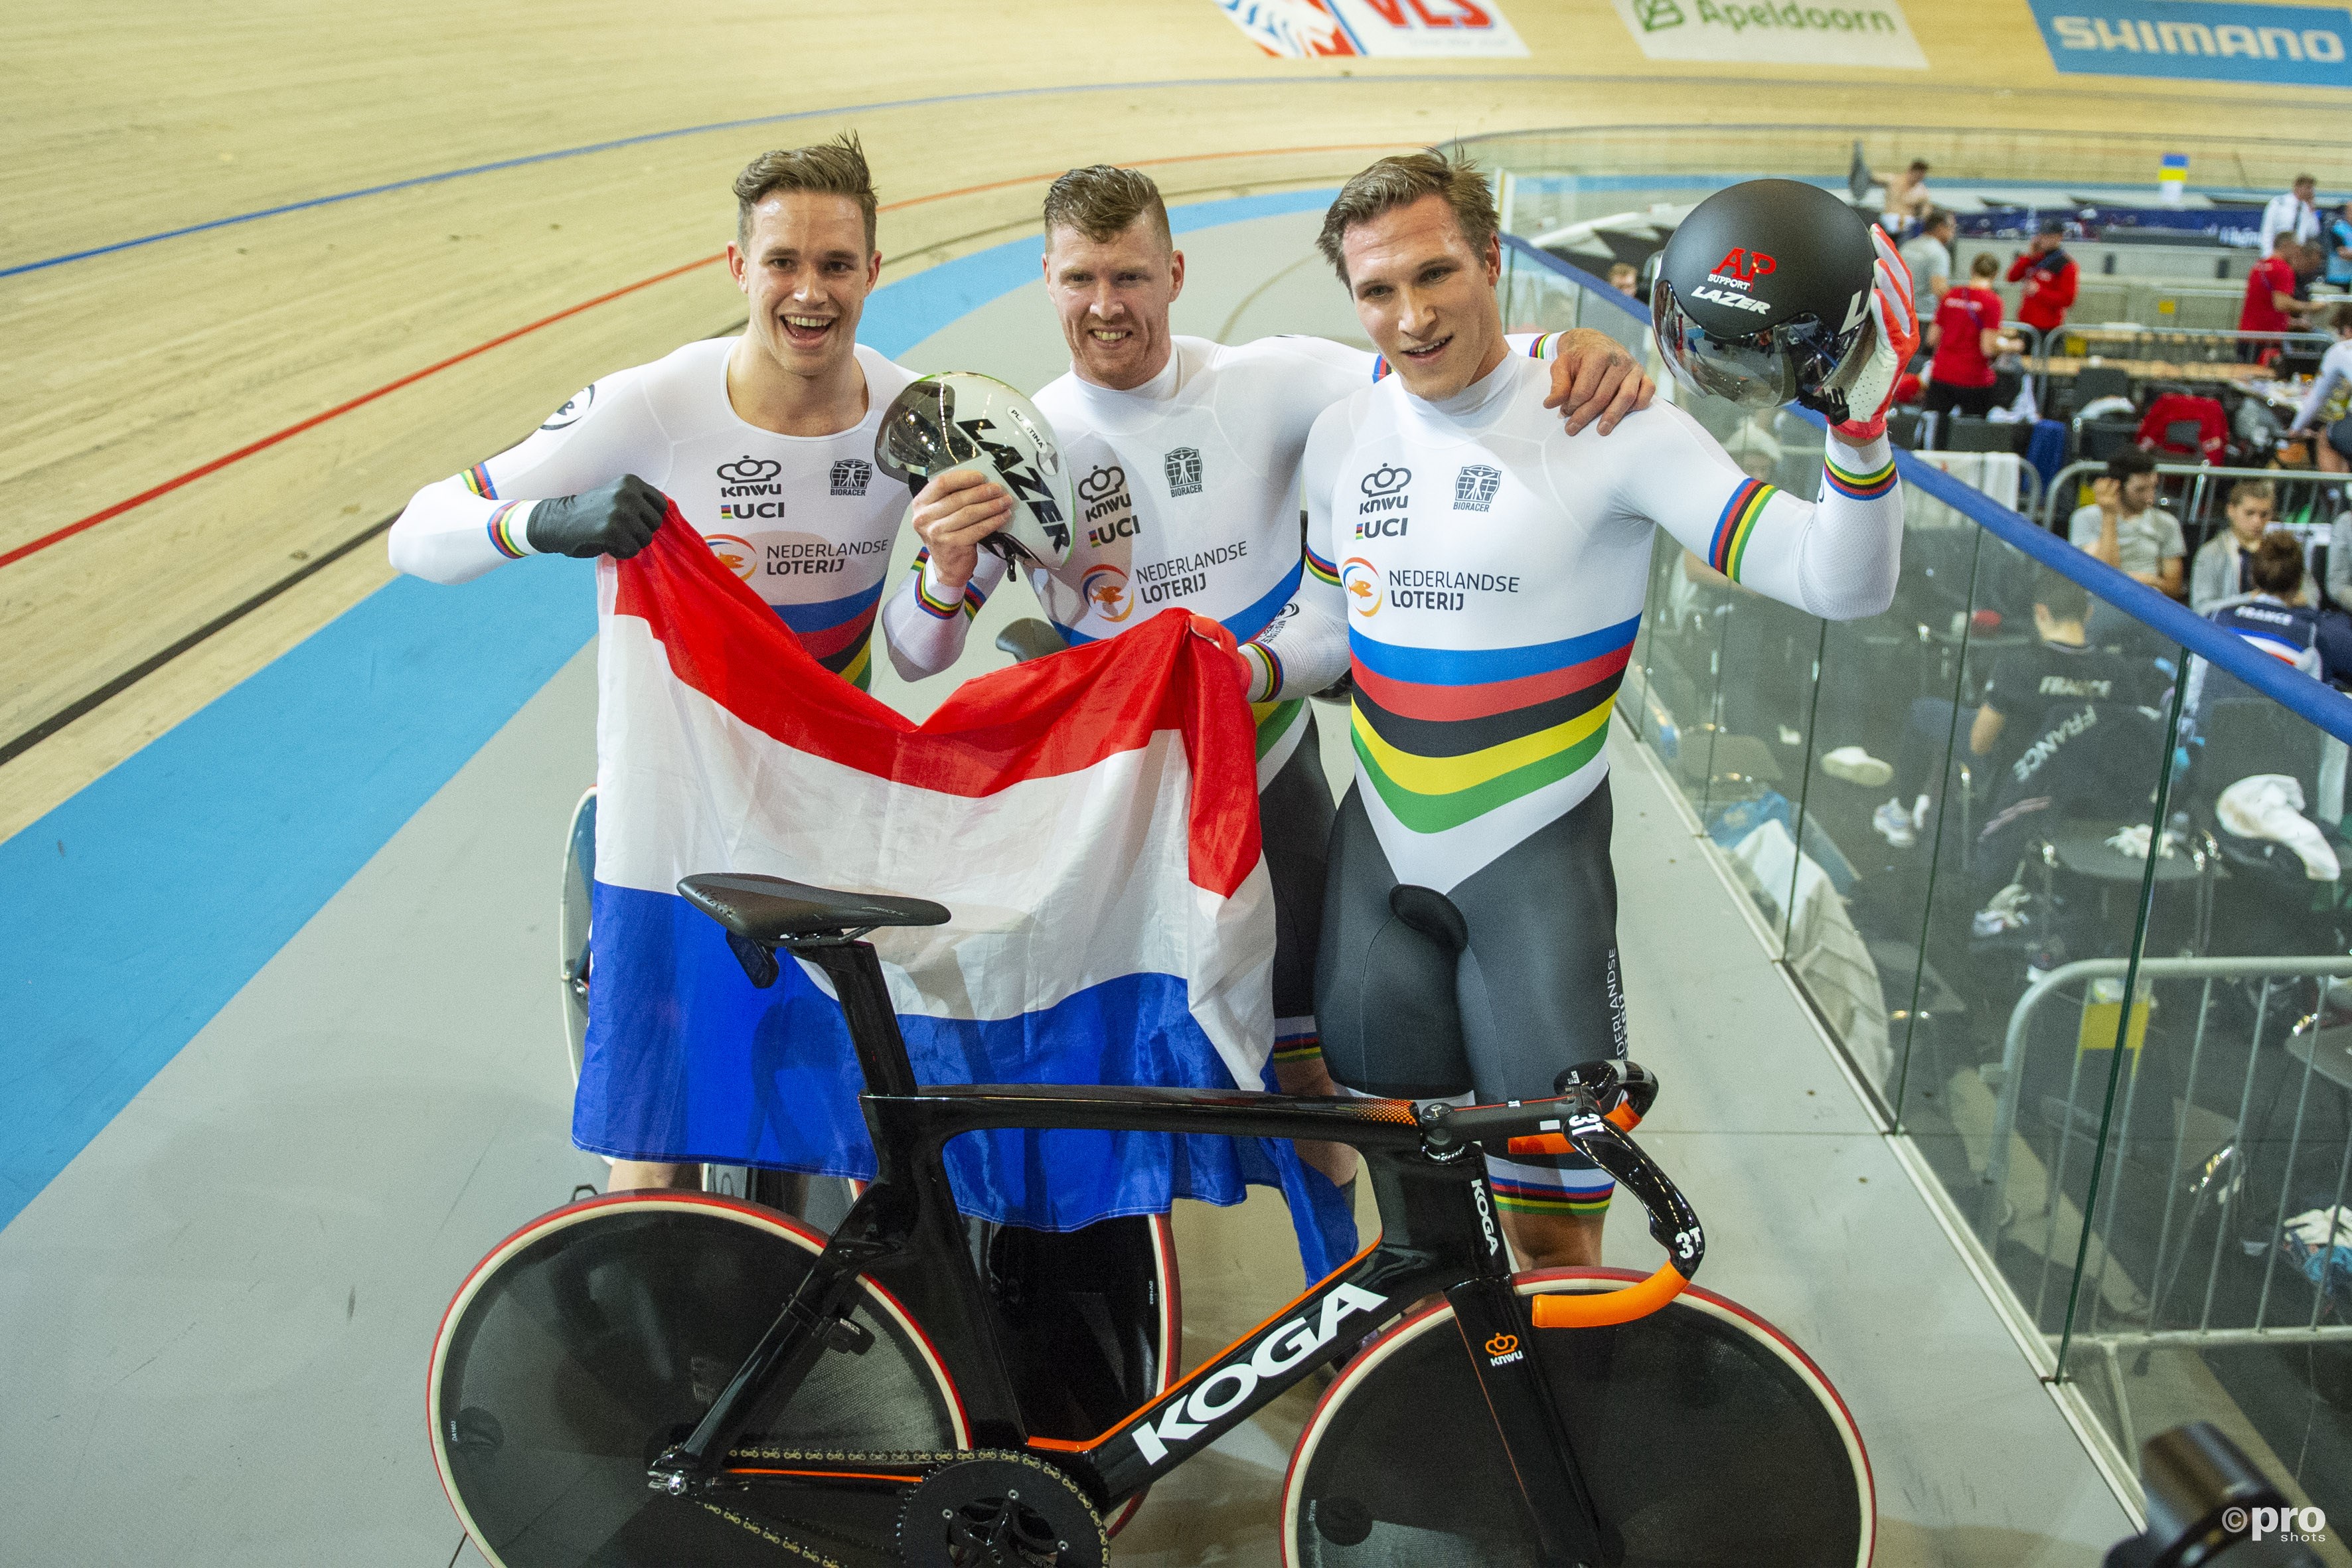 Heren veroveren Europese titel Team Sprint. (PRO SHOTS/Paul Meima)